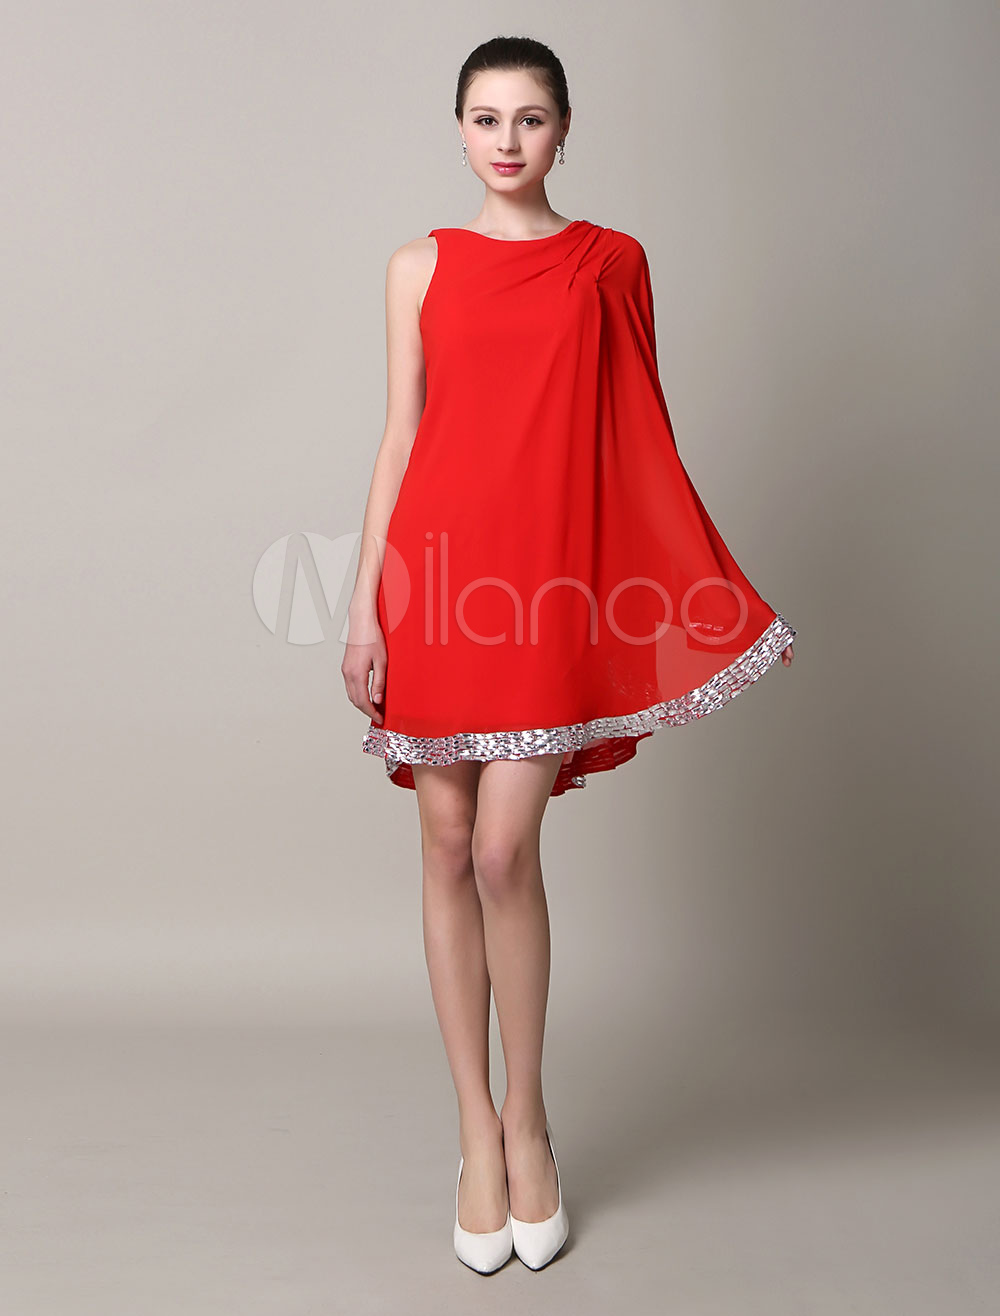 Red Beaded Ruffle Short Homecoming Dress for Women (Wedding Cheap Party Dress) photo